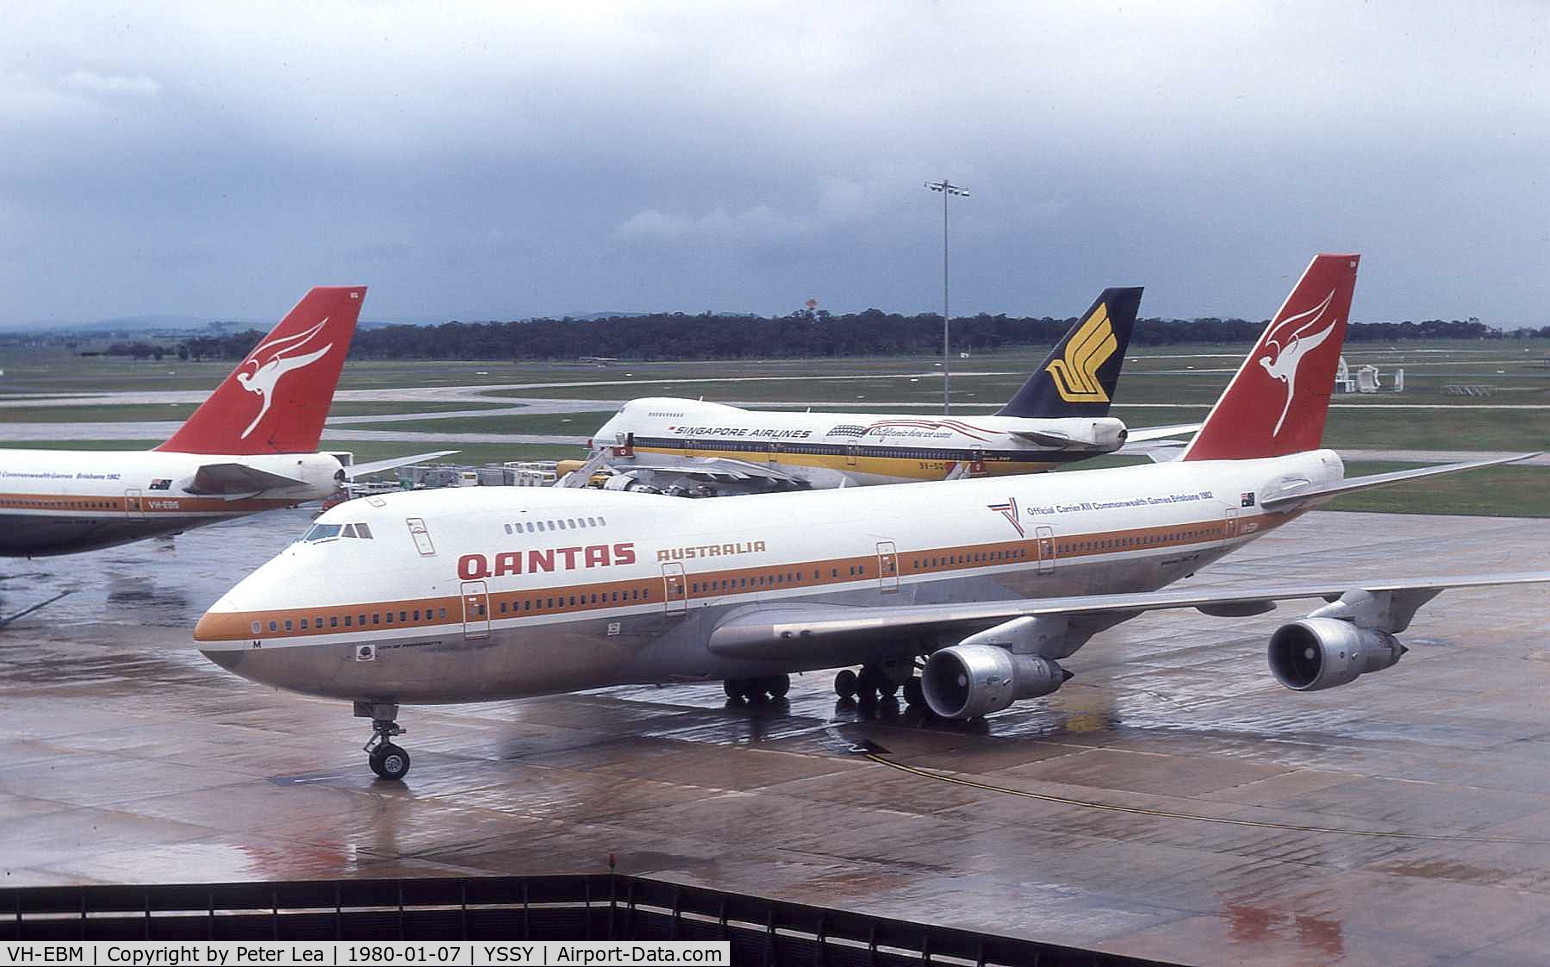 VH-EBM, 1977 Boeing 747-238B C/N 21352, Qantas Boeing 747-239B at Sydney Airport